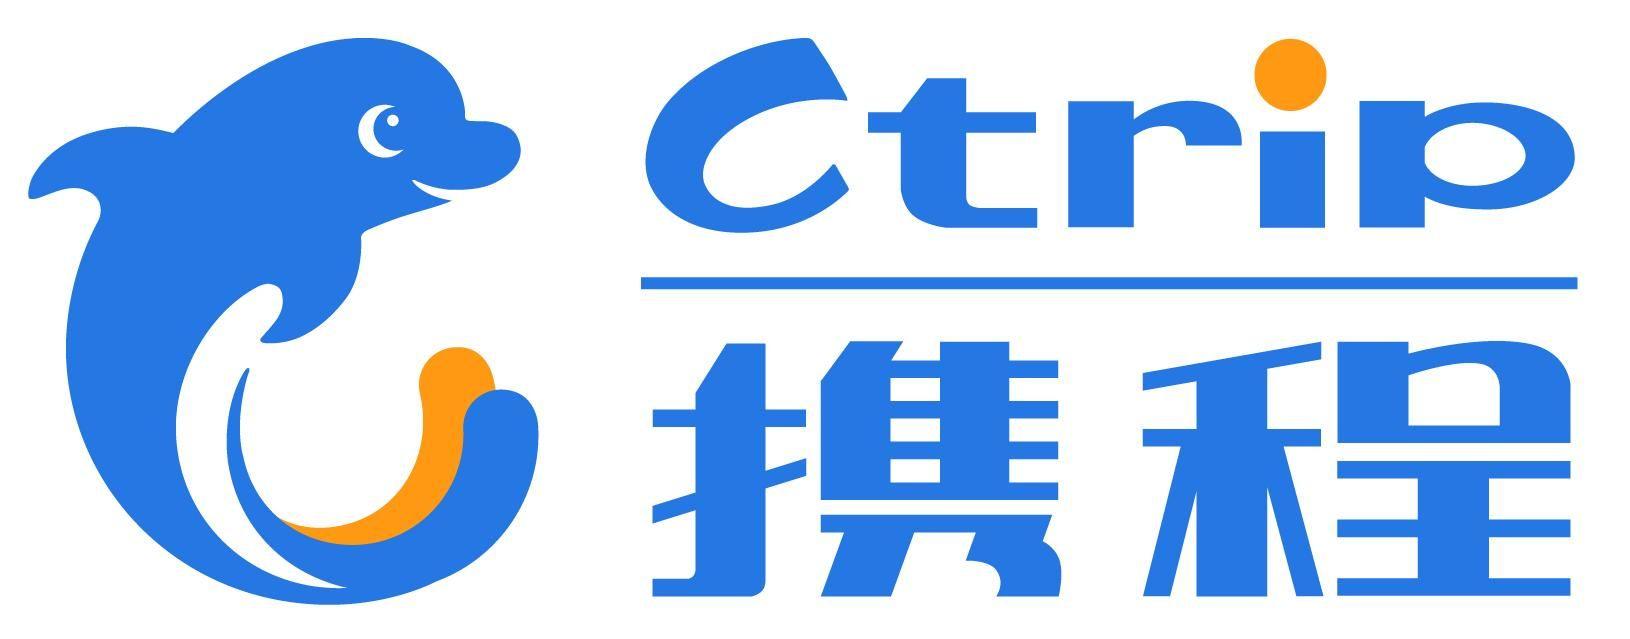 Ctrip Logo - A Deeper Look At Ctrip's Growth Prospects.com International